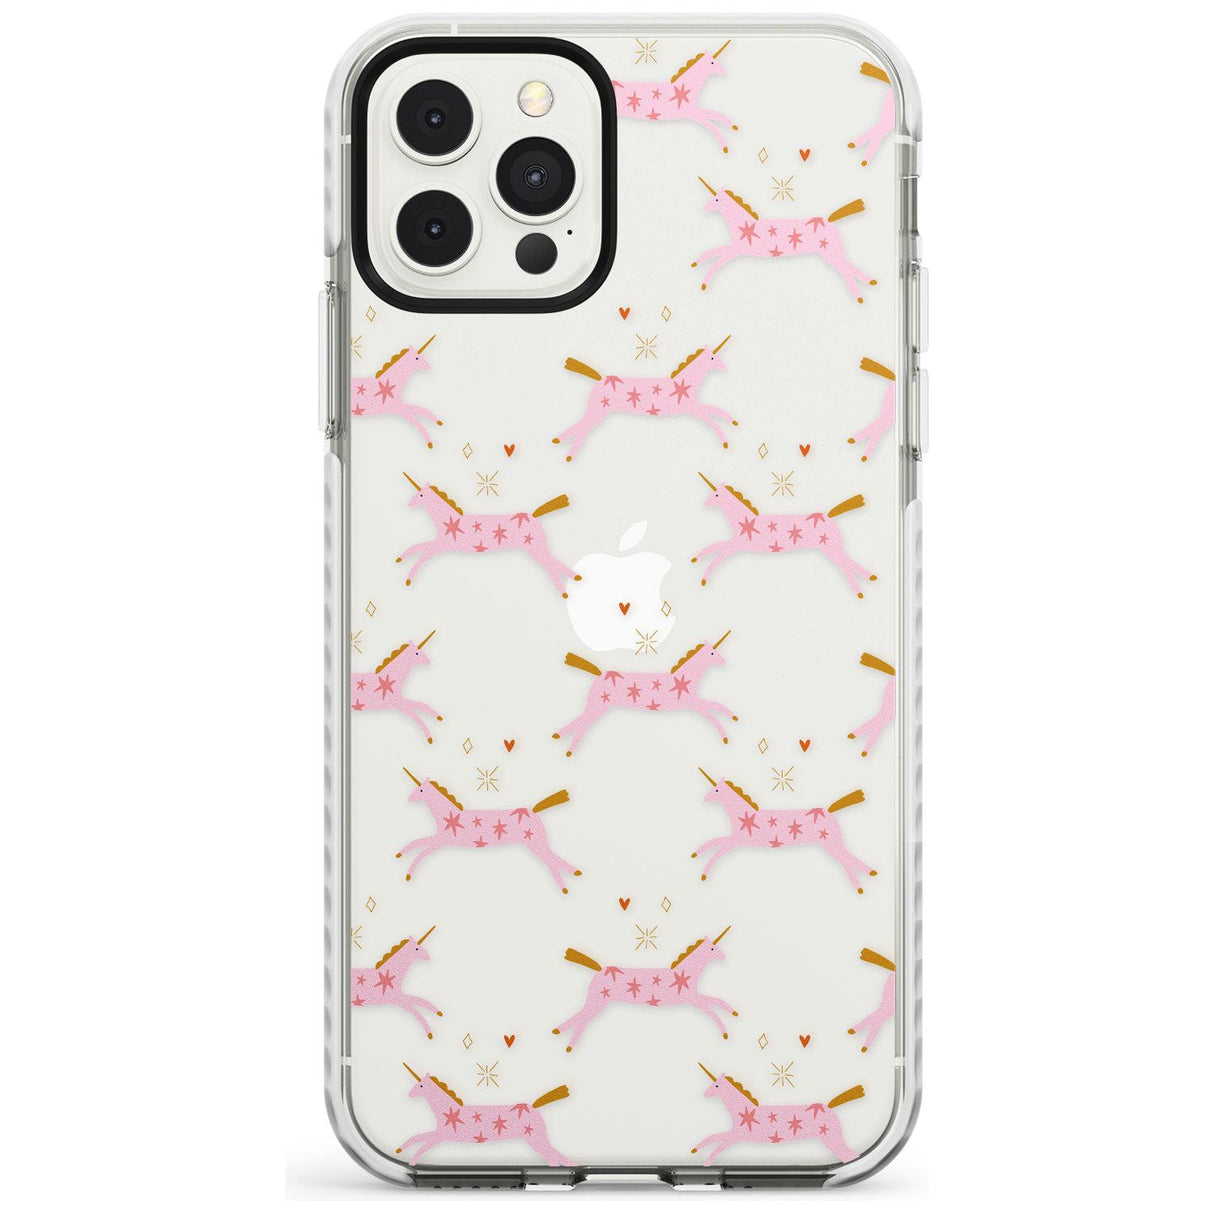 Pink Unicorns Slim TPU Phone Case for iPhone 11 Pro Max